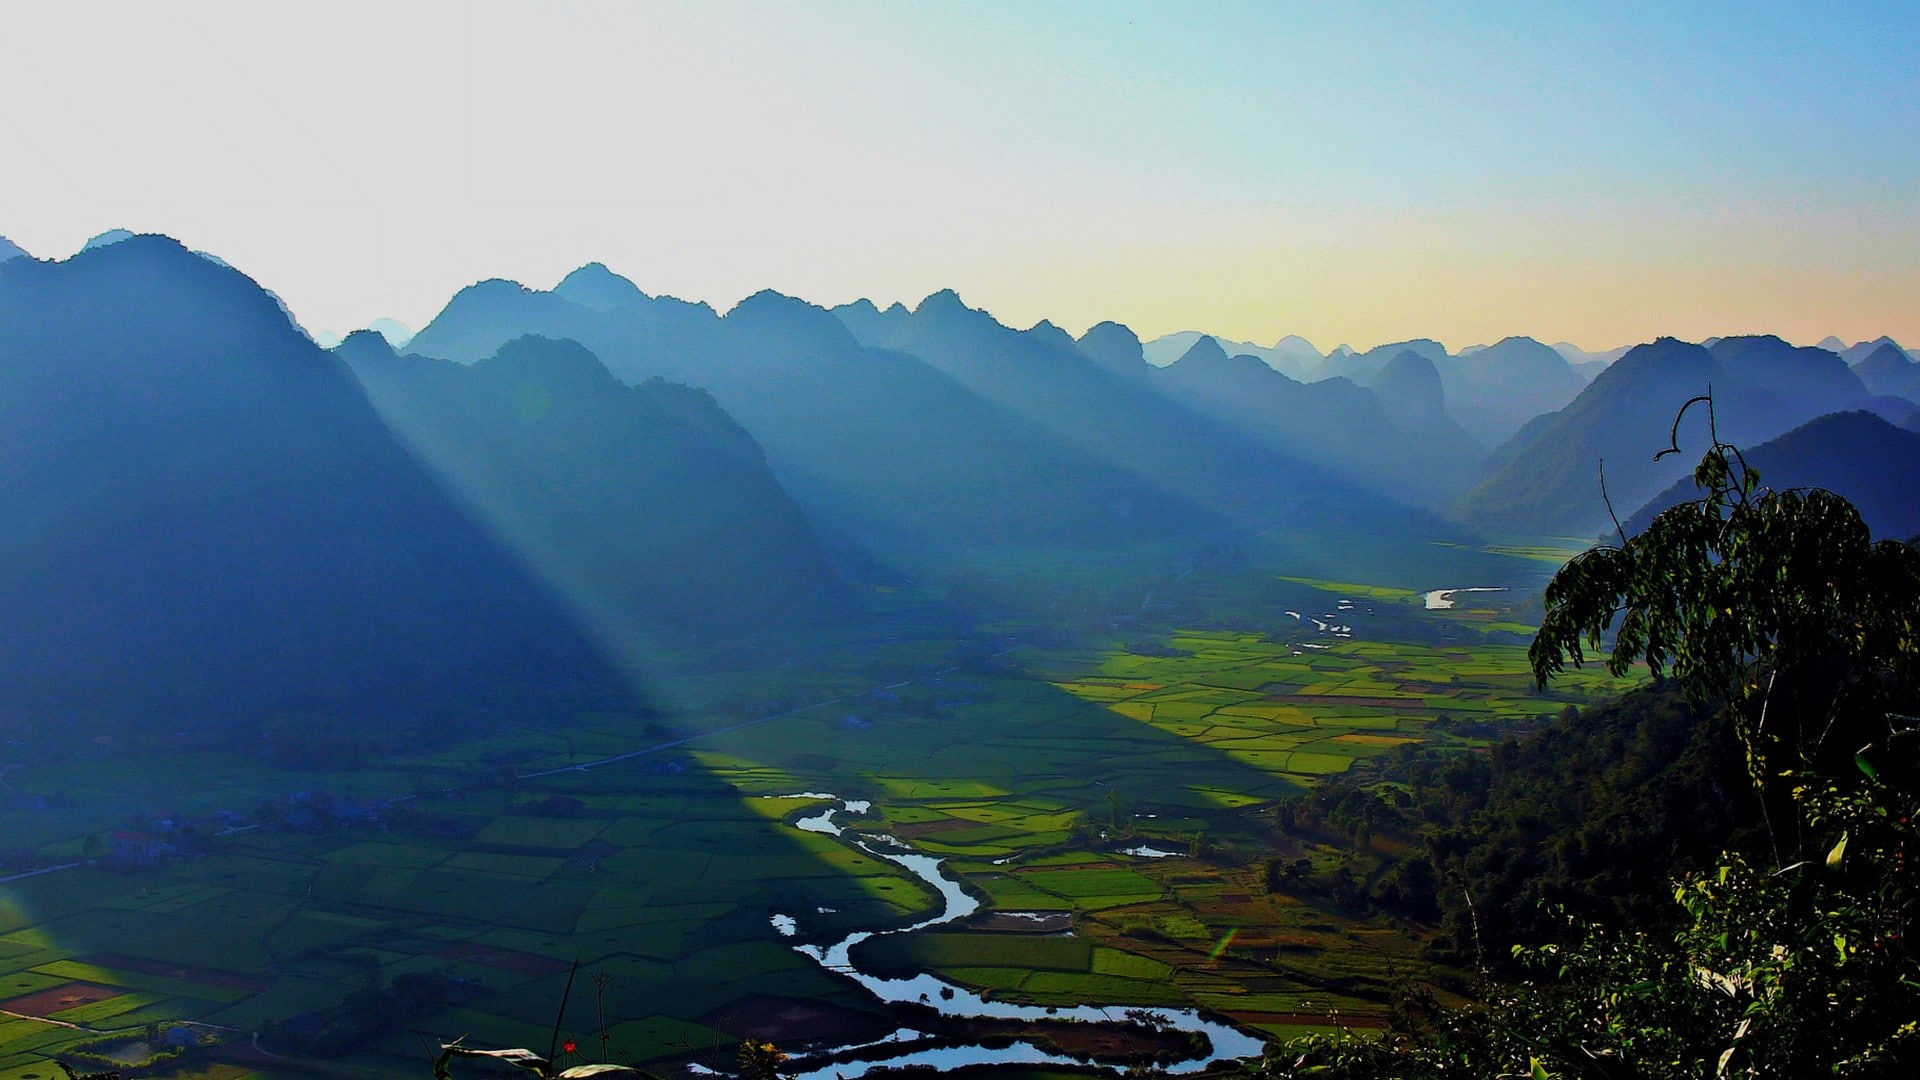 Landscape, Nature, Sunrise, Mountain, Mist, Valley, River, Field, Sun Rays, Vietnam, Clear Sky, Morning, Farm